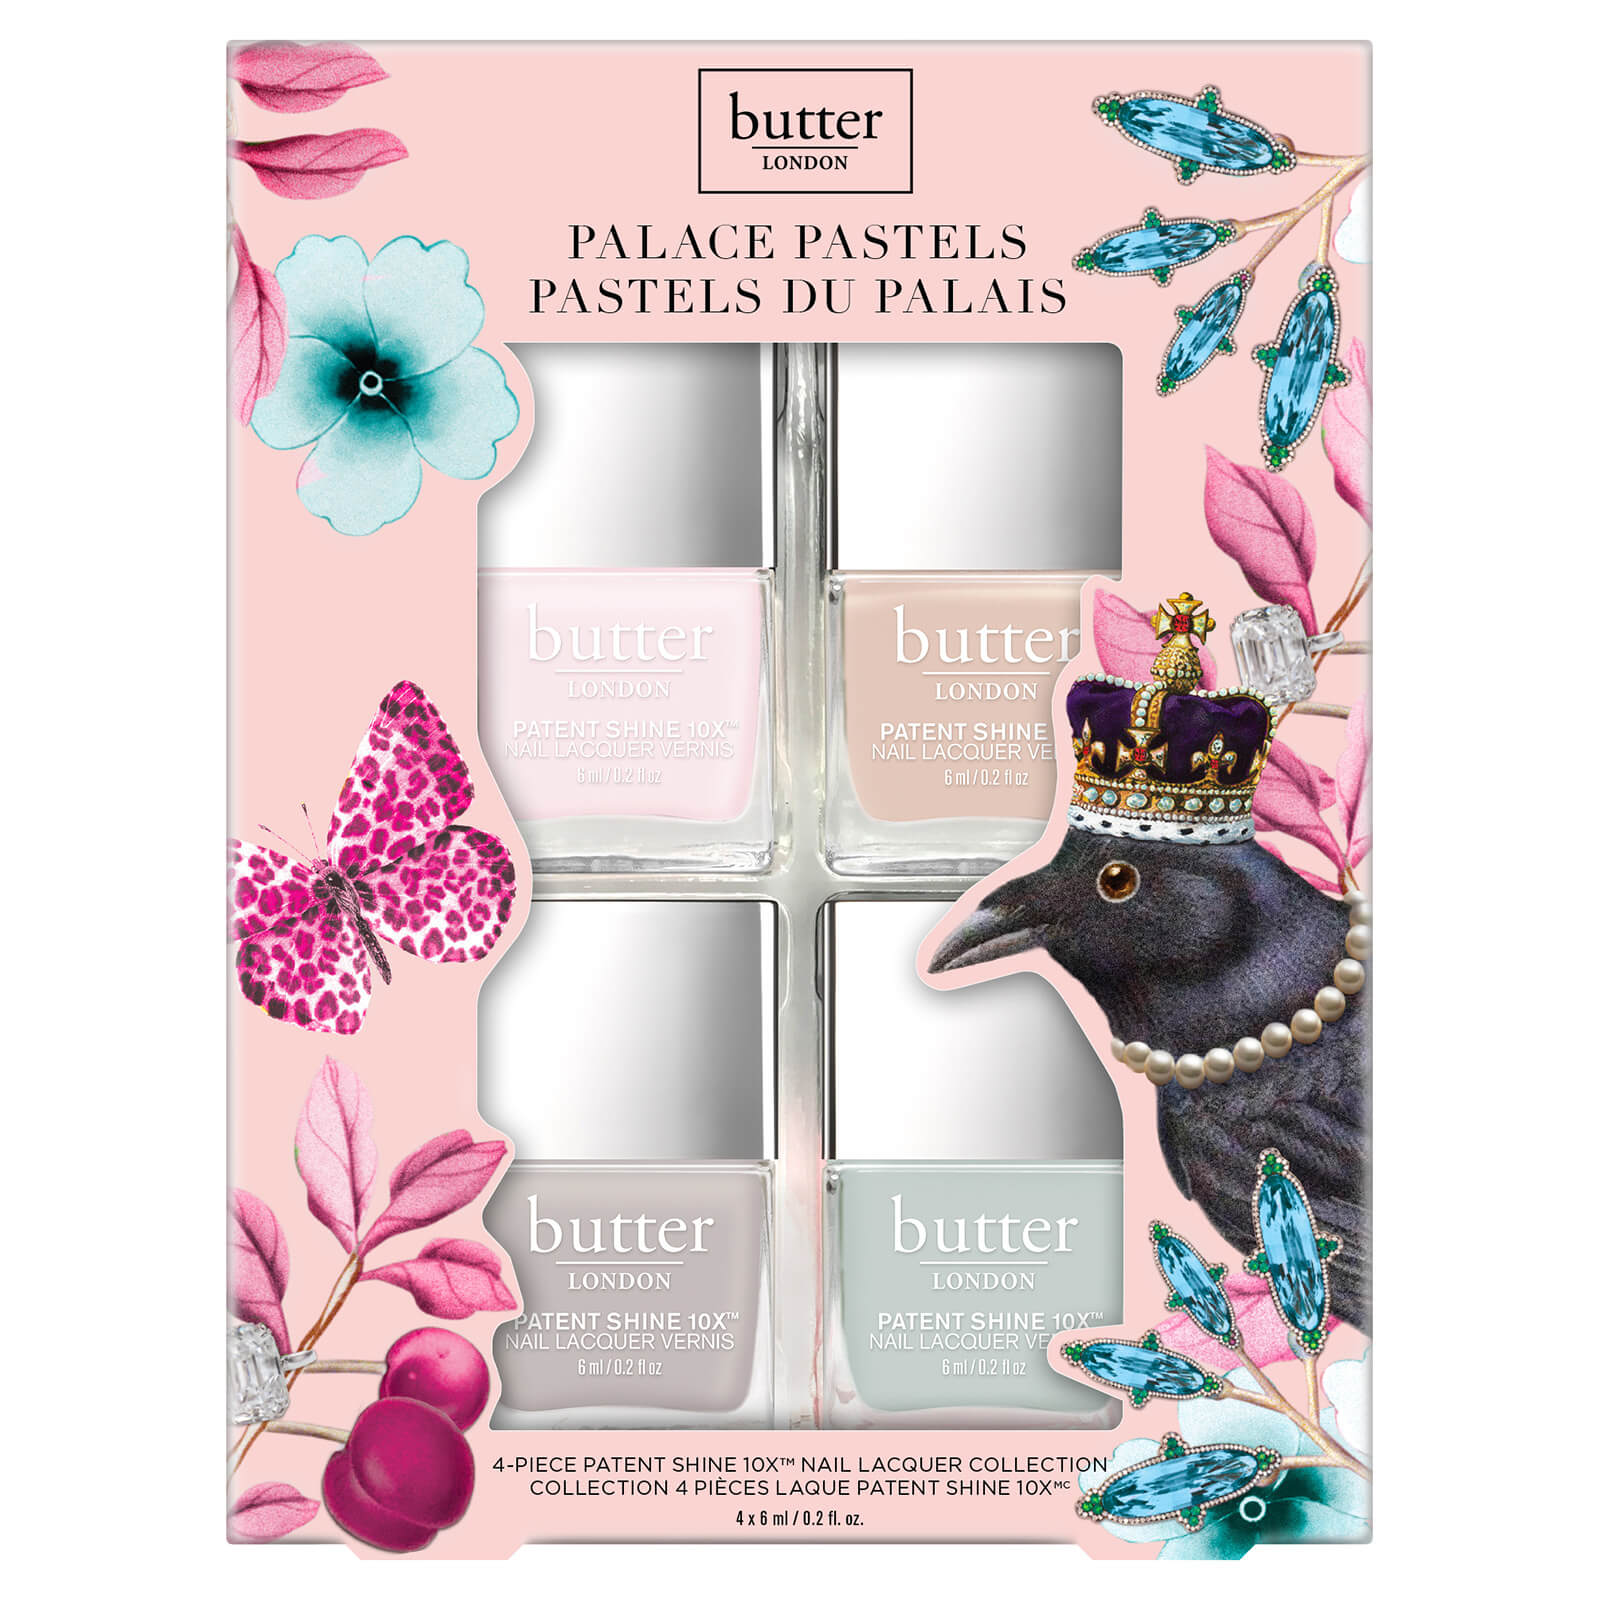 butter LONDON Palace Pastels Gift Set